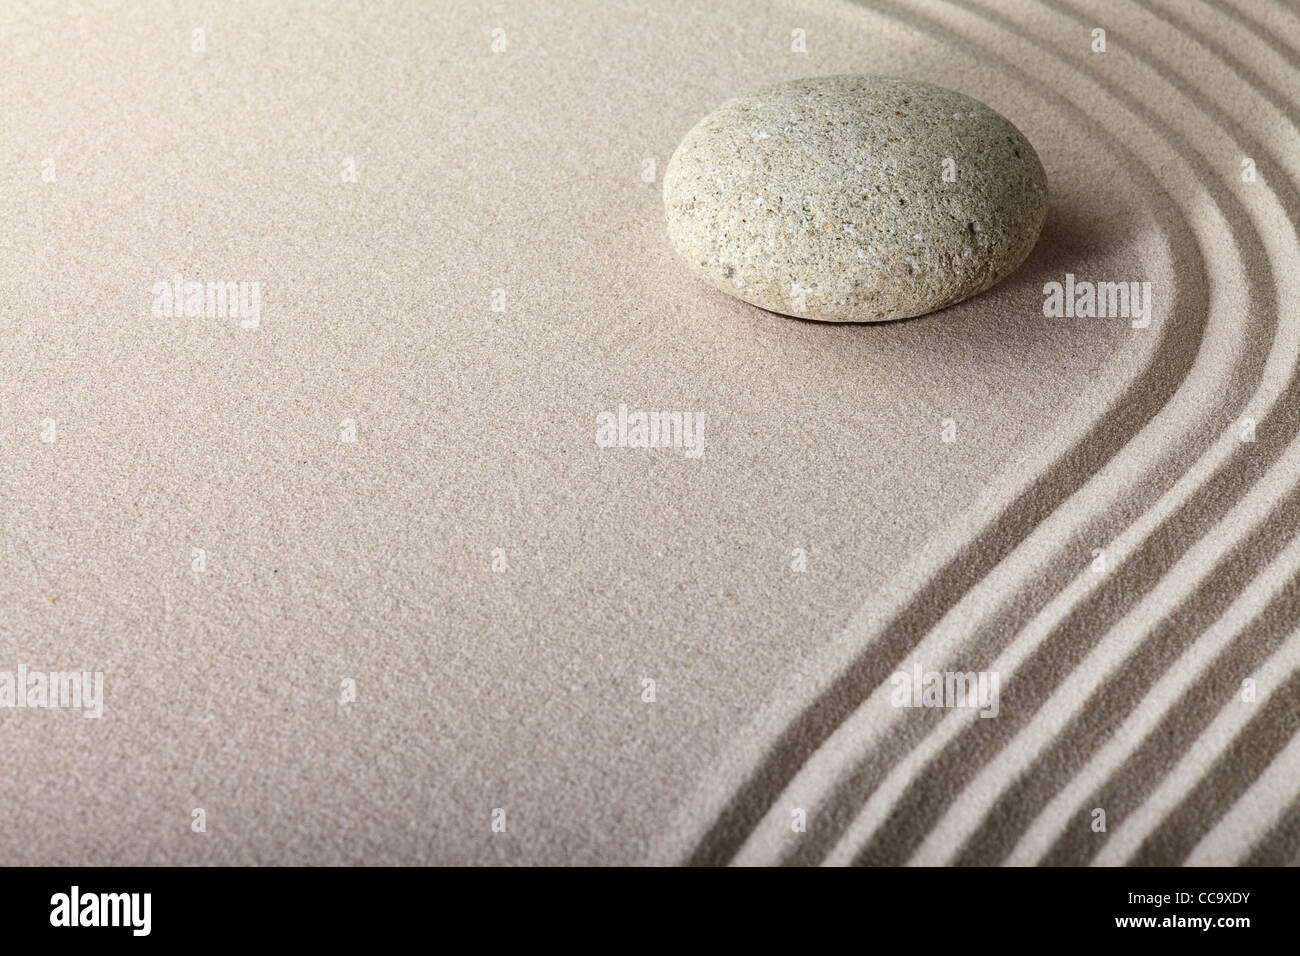 zen sand stone garden japanese meditation relaxation and spa image spiritual balance round rock Stock Photo